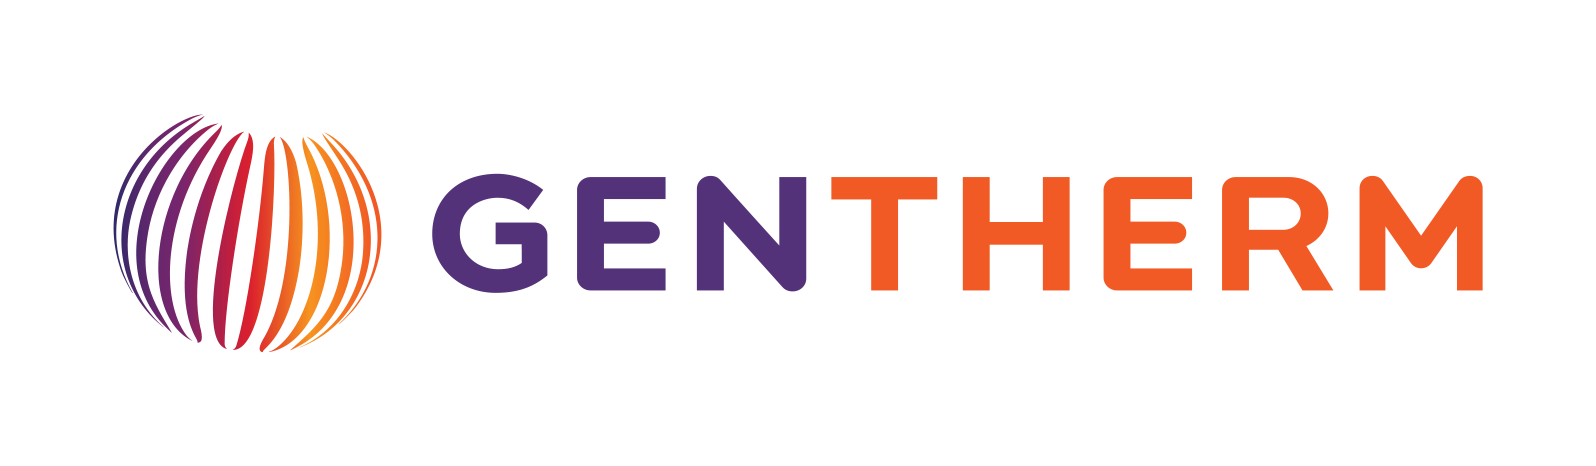 Gentherm Establishes New Technology Advisory Council